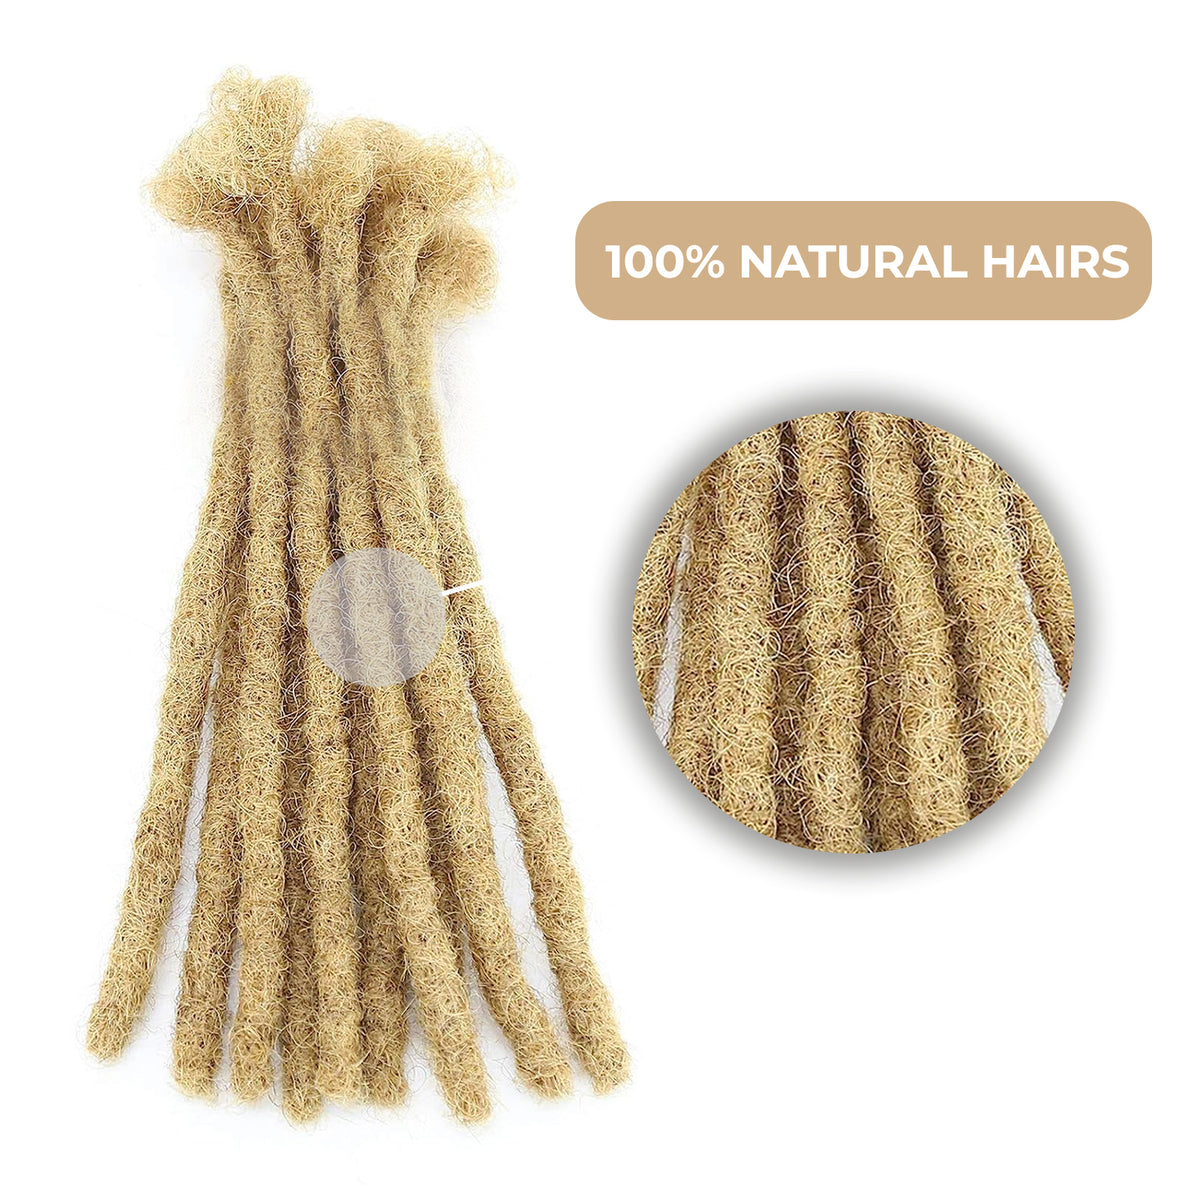 100% Human Hair Blonde Dreadlock Extensions 16Inch 10 Strands Handmade Natural Loc Extensions Human Hair Bundle Dreads Extensions For Woman & Men (27/Honey Blonde 16inch length 0.8cm Width)